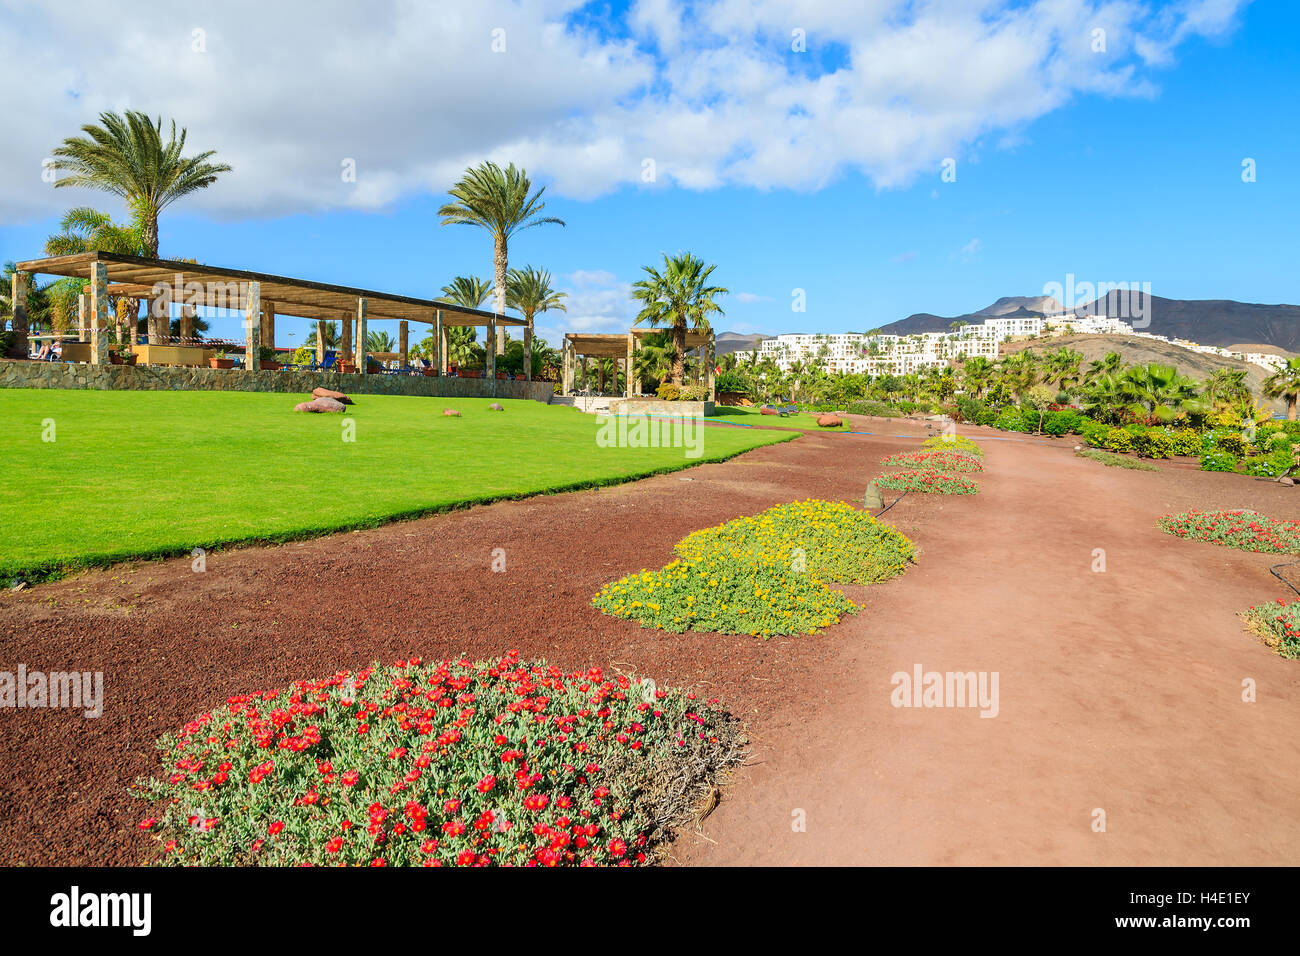 LAS PLAYITAS, FUERTEVENTURA - FEB 7, 2014: beautiful hotel gardens on coast of Fuerteventura island. Canary Islands are popular holiday destination. Stock Photo